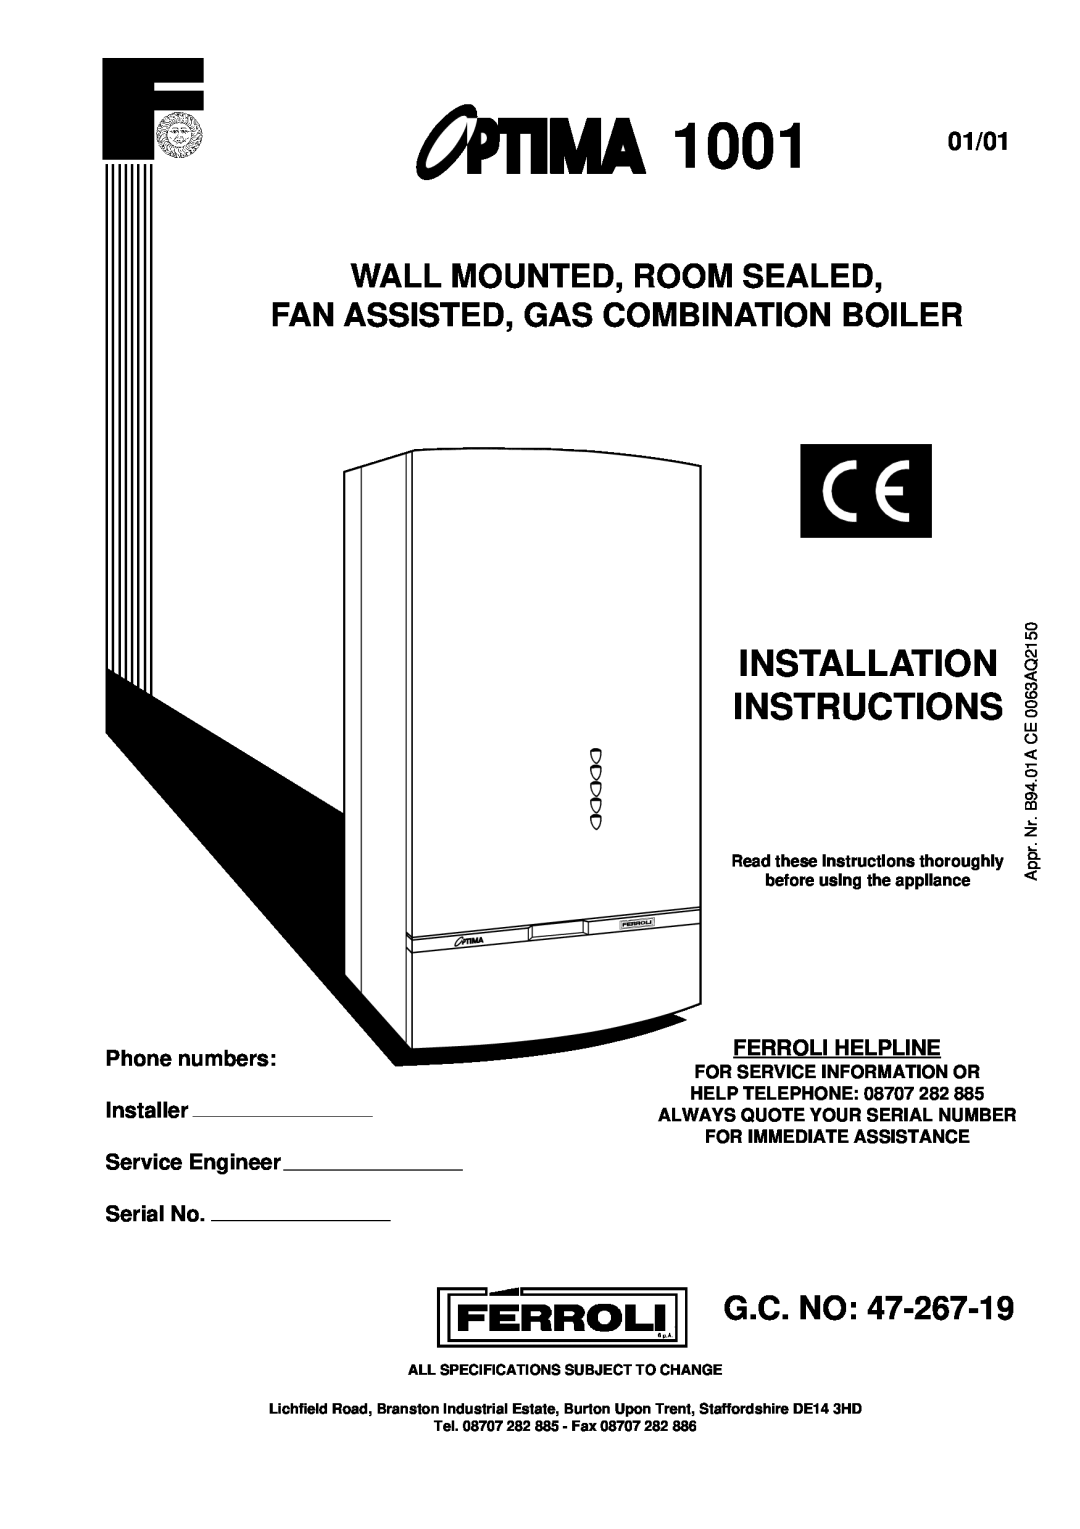 Optima Company installation instructions Installation Instructions, 1001 01/01, Wall Mounted, Room Sealed, G.C. No 